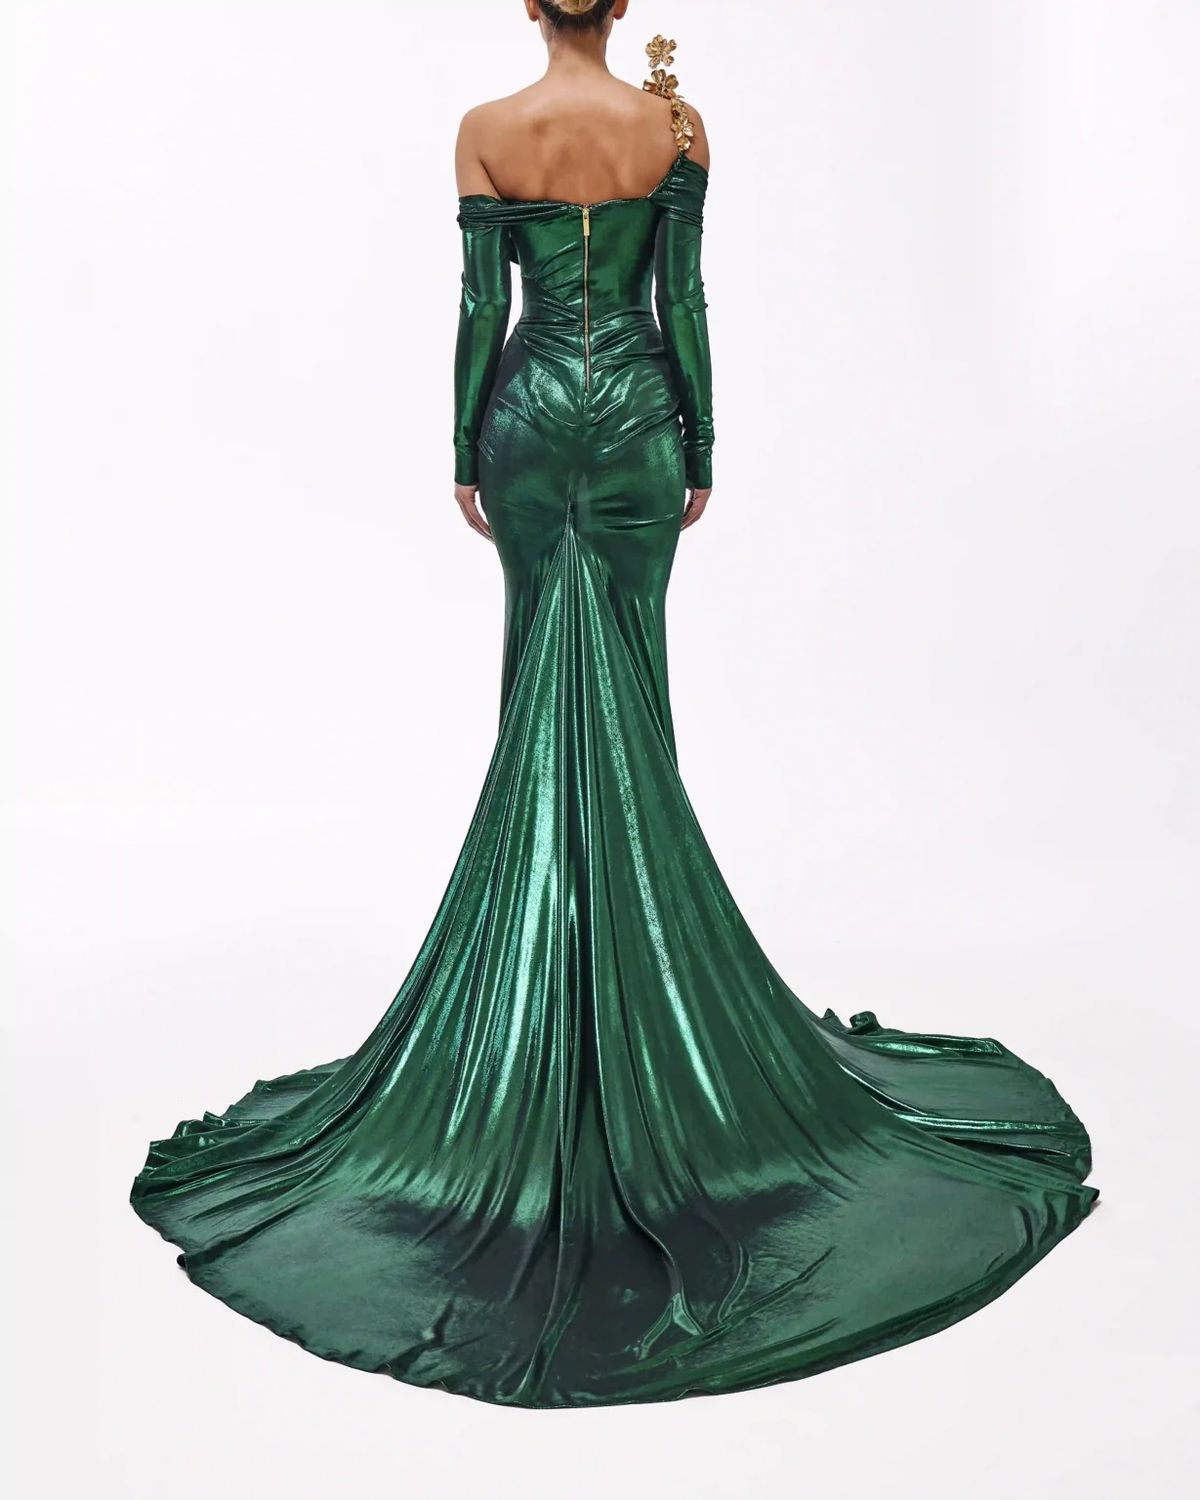 Style metallic-majesty-24-25 Valdrin Sahiti Size M Pageant Green Mermaid Dress on Queenly